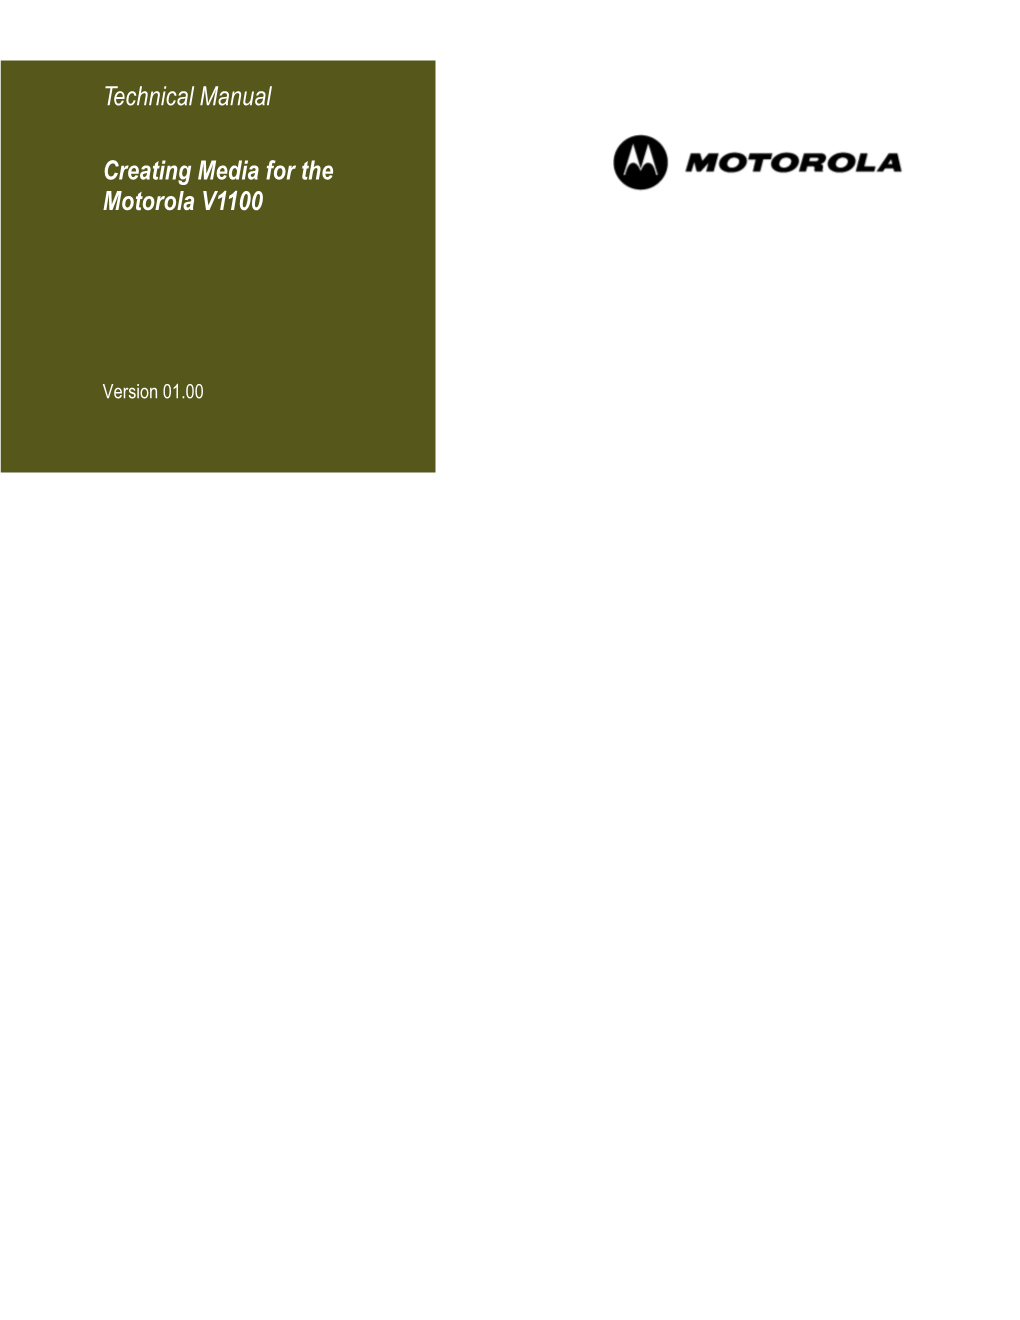 Technical Manual Creating Media for the Motorola V1100